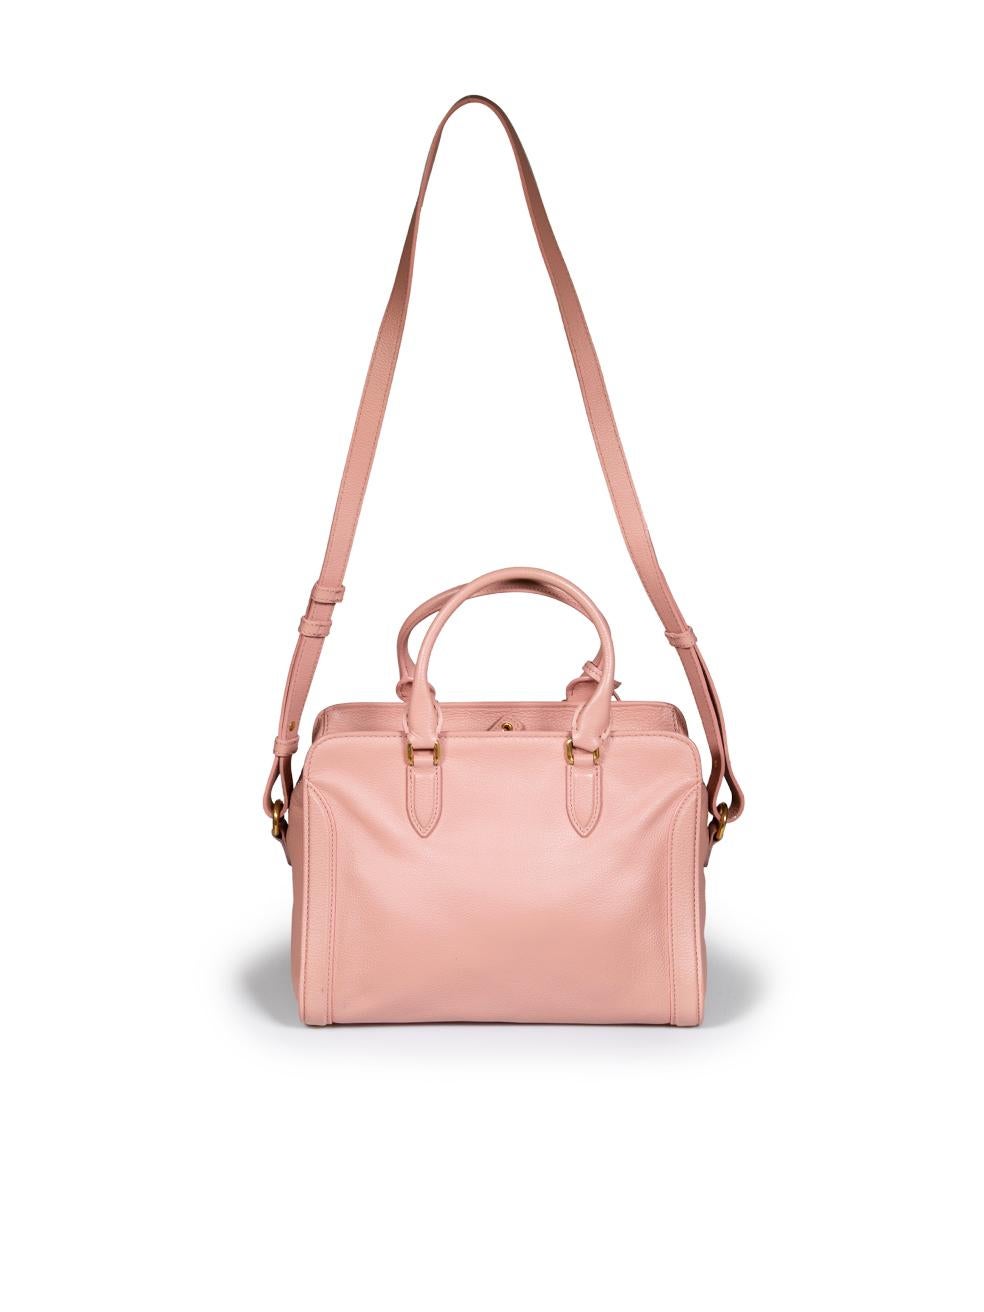 Alexander McQueen Pink Leather Skull Padlock Handbag In Good Condition For Sale In London, GB